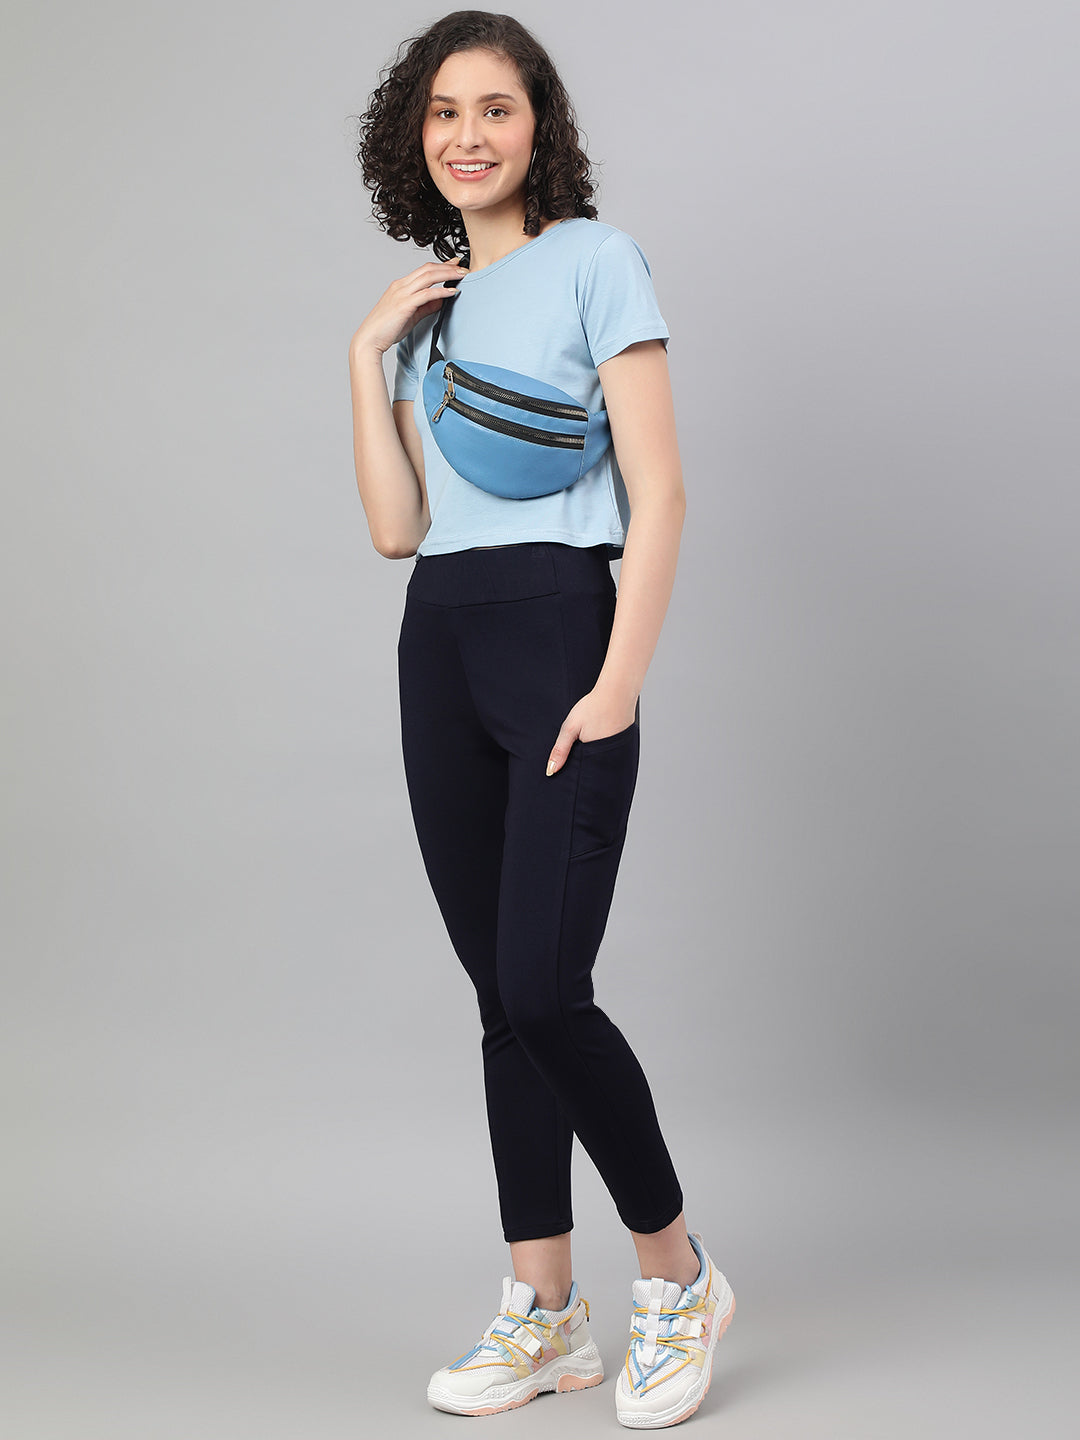 Supima Cotton Blue Color T-shirts for women - BeSimple